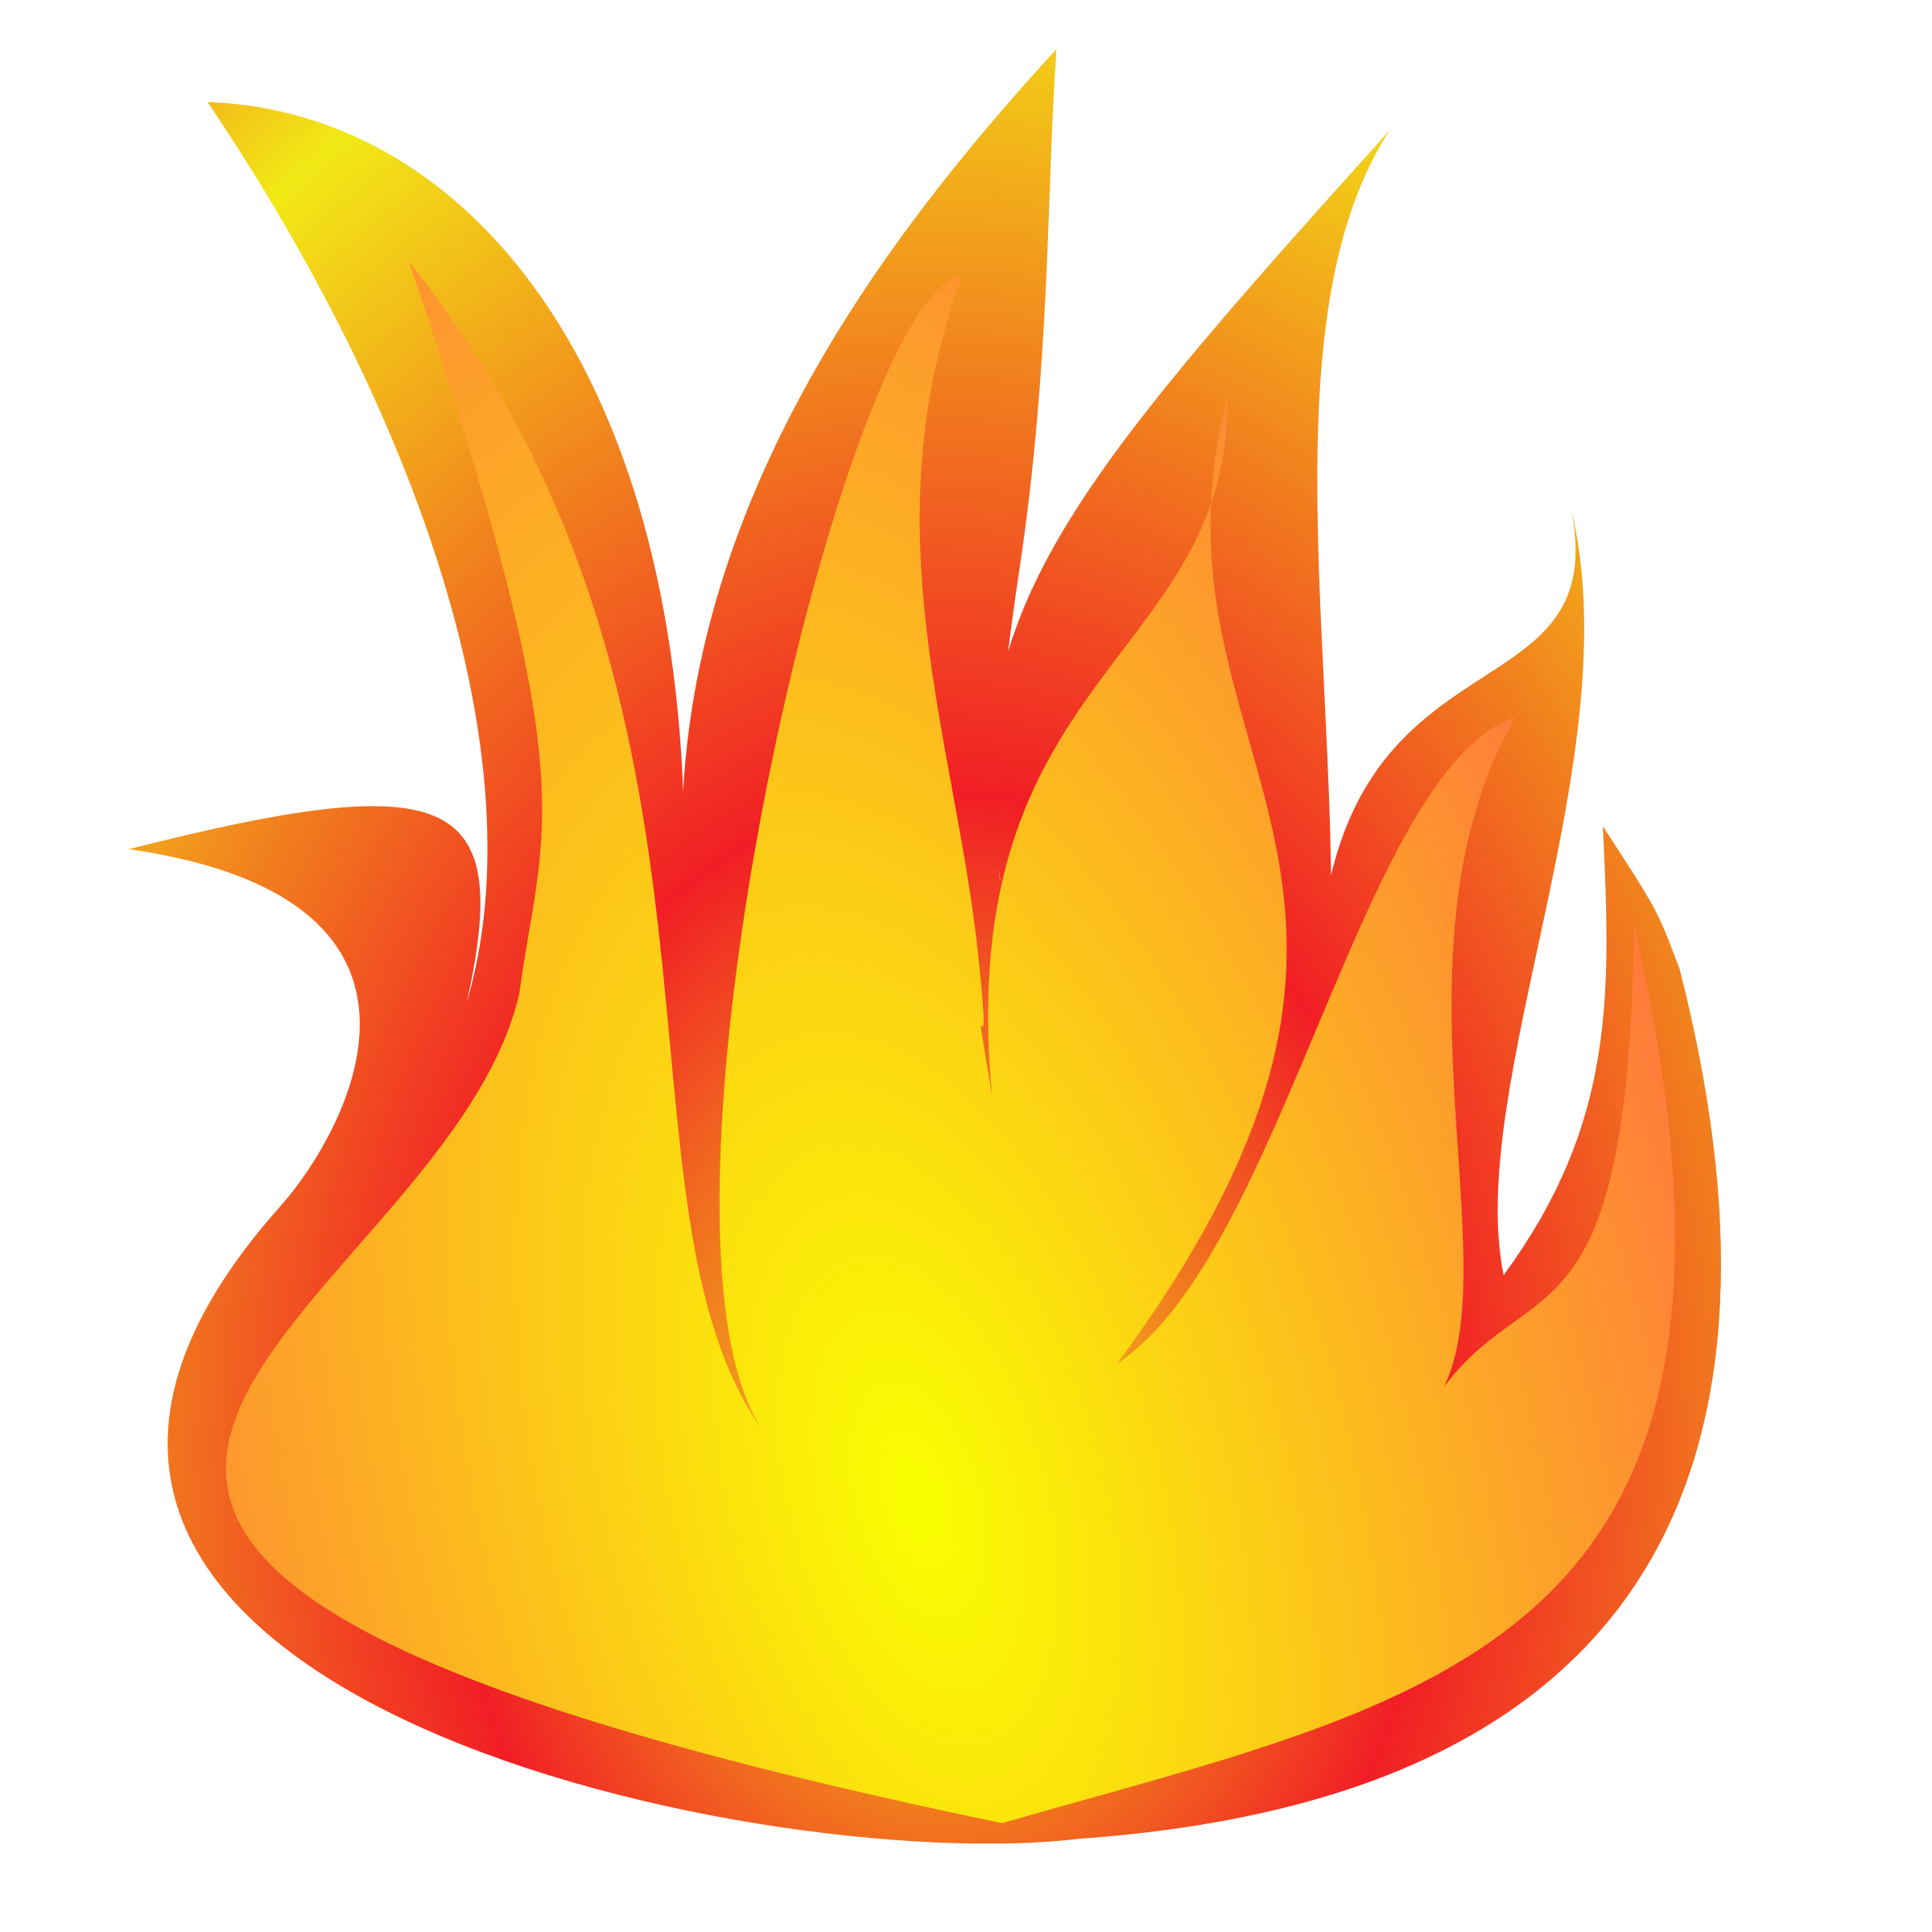 Fireplace fire clipart free c - Clip Art Of Fire